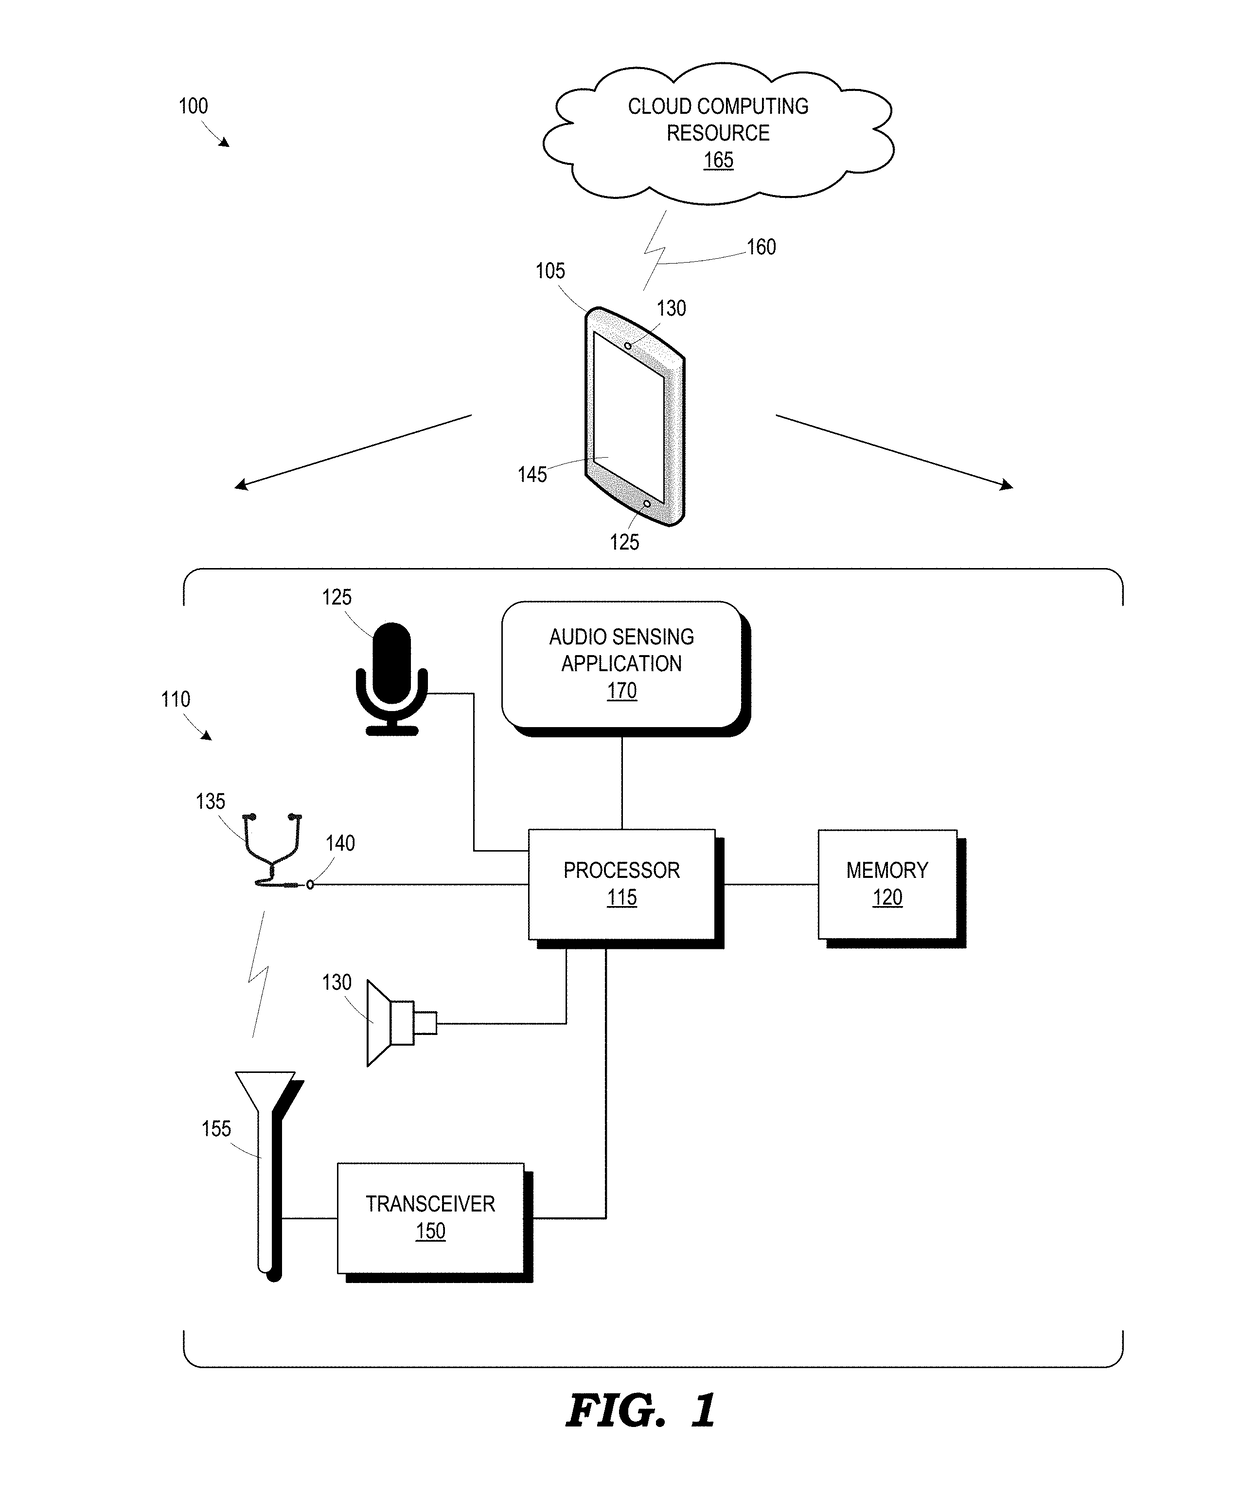 Audio sensing to alert device user